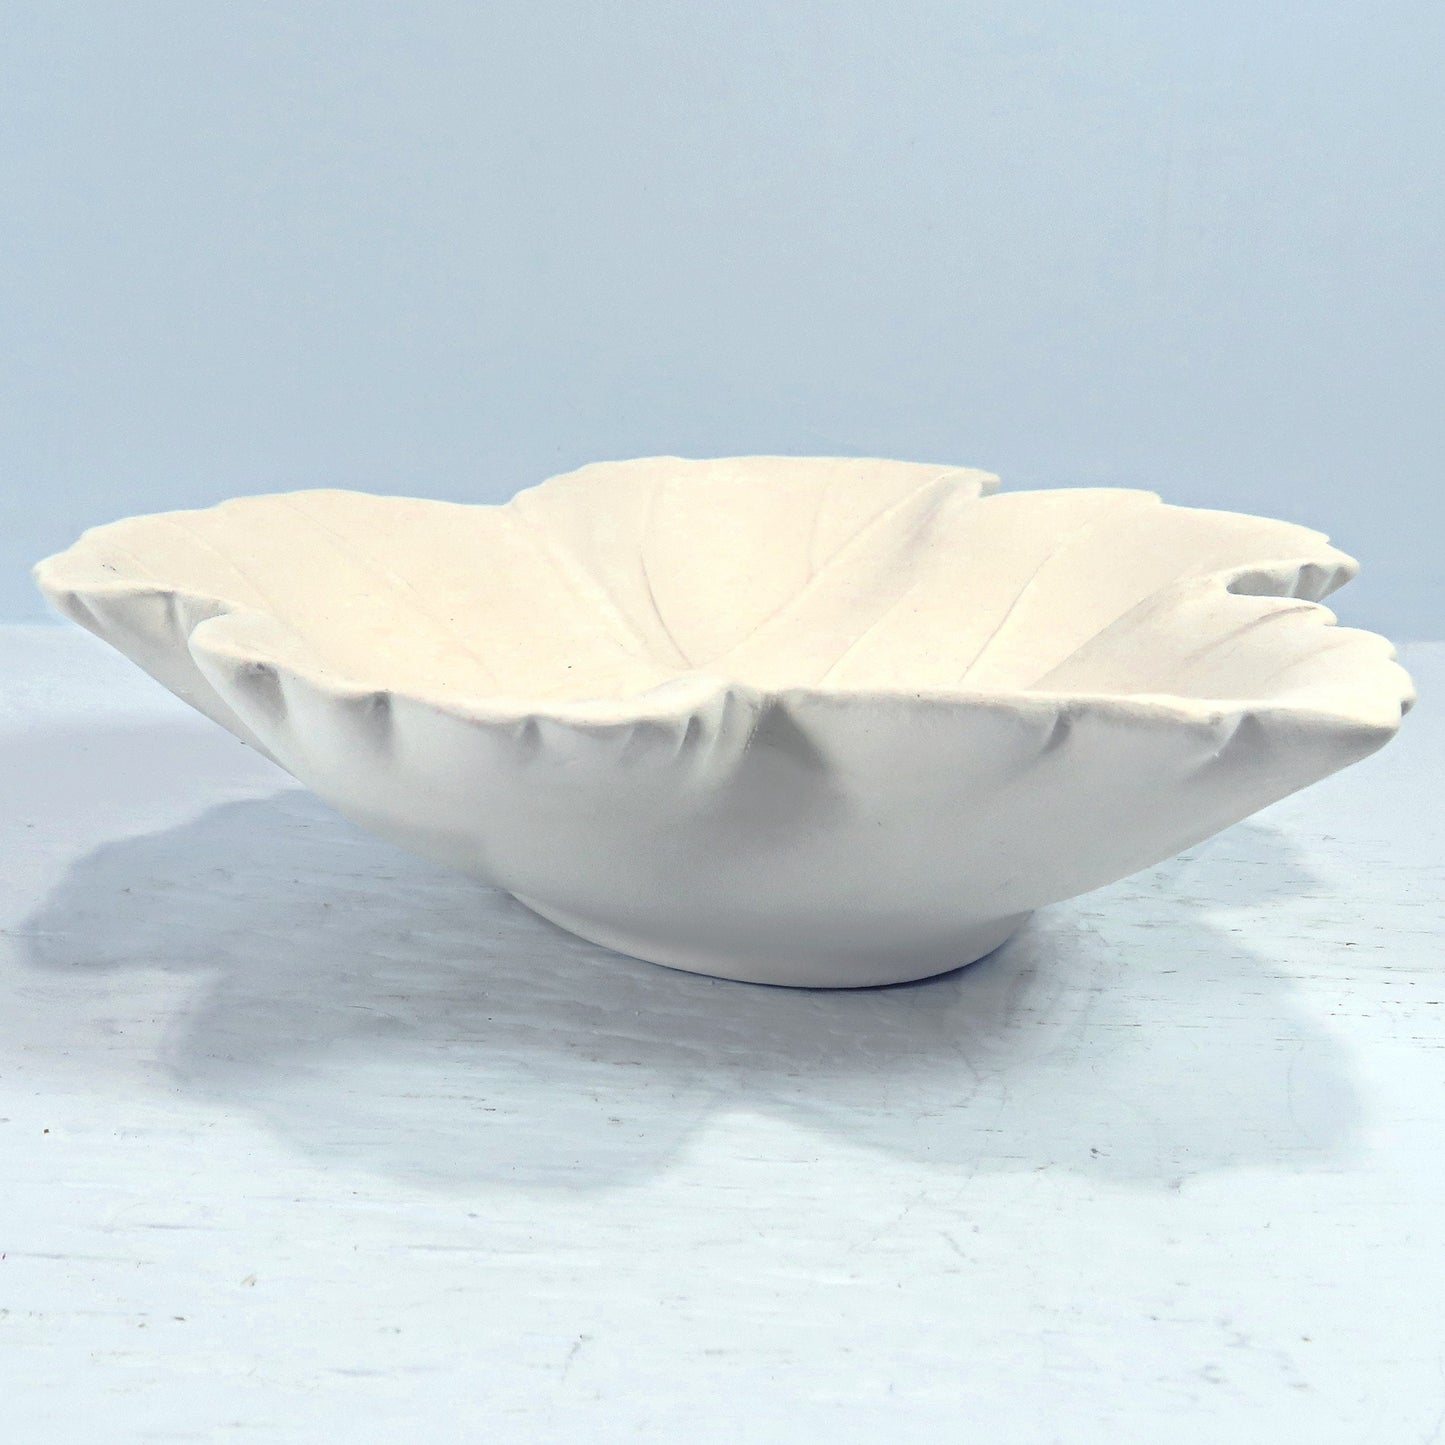 Ready to Paint Handmade Ceramic Maple Leaf Trinket Dish / Nature Decor / Maple Leaf Gift